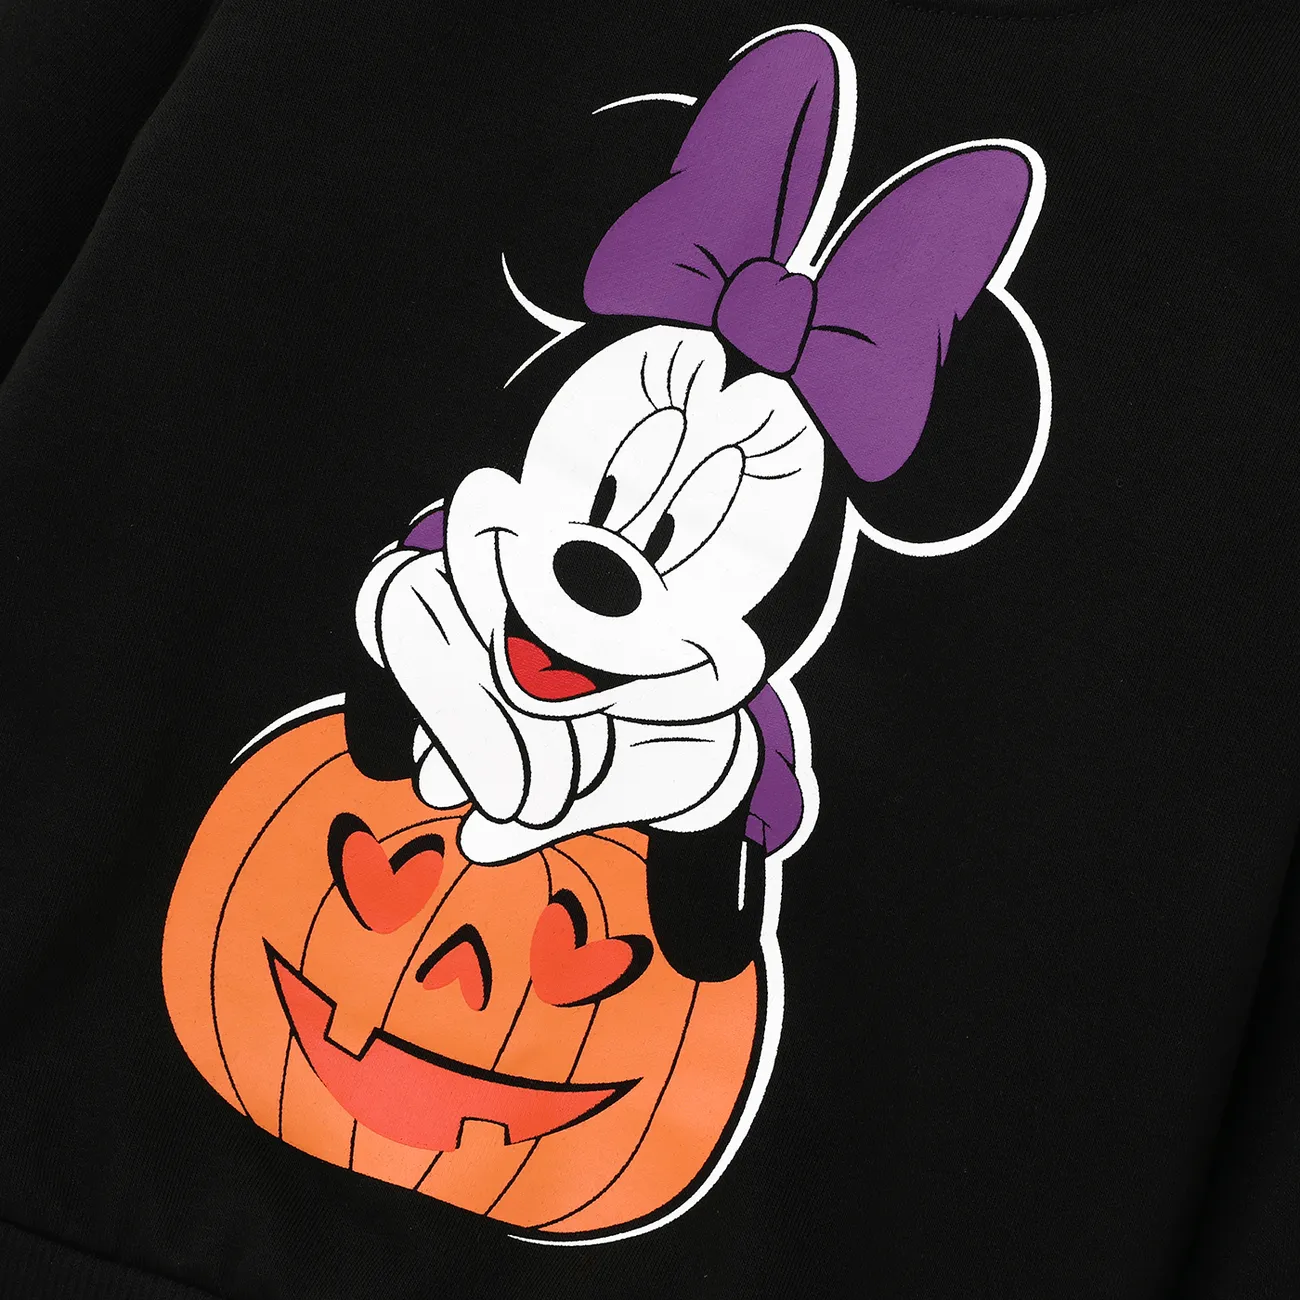 Disney Mickey and Friends Look Familial Halloween Manches longues Tenues de famille assorties Hauts Noir big image 1